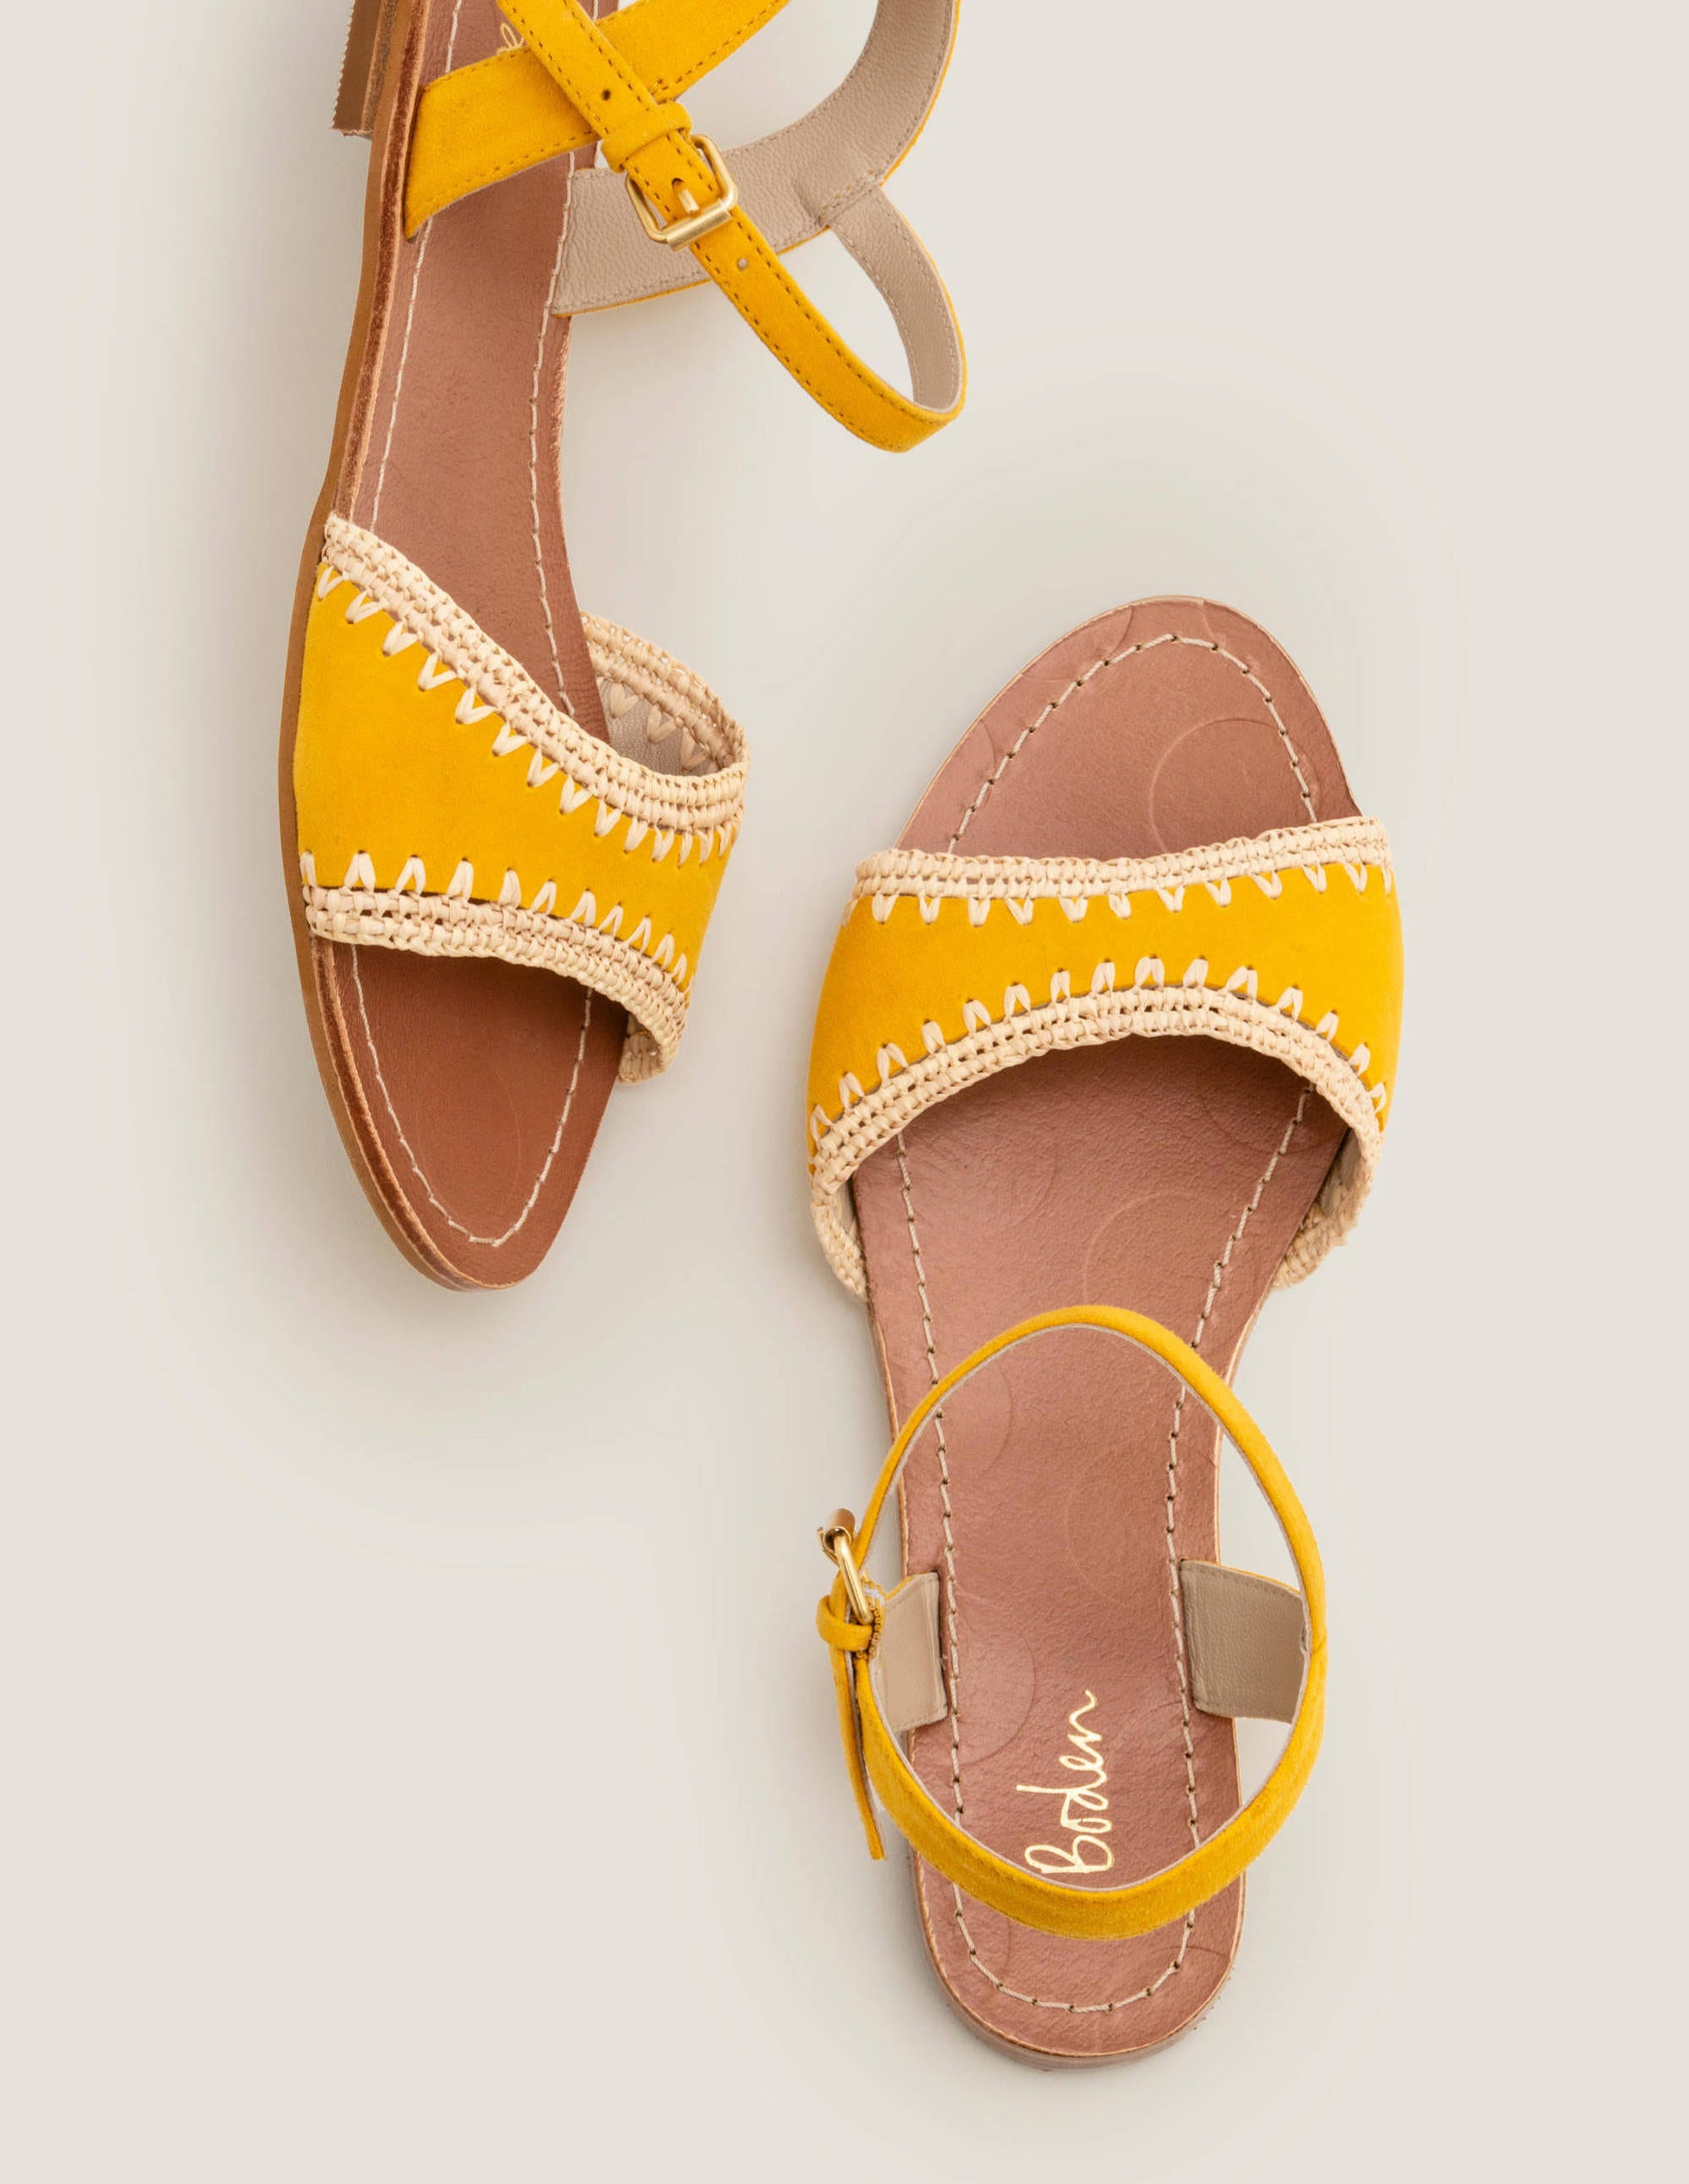 boden yellow sandals